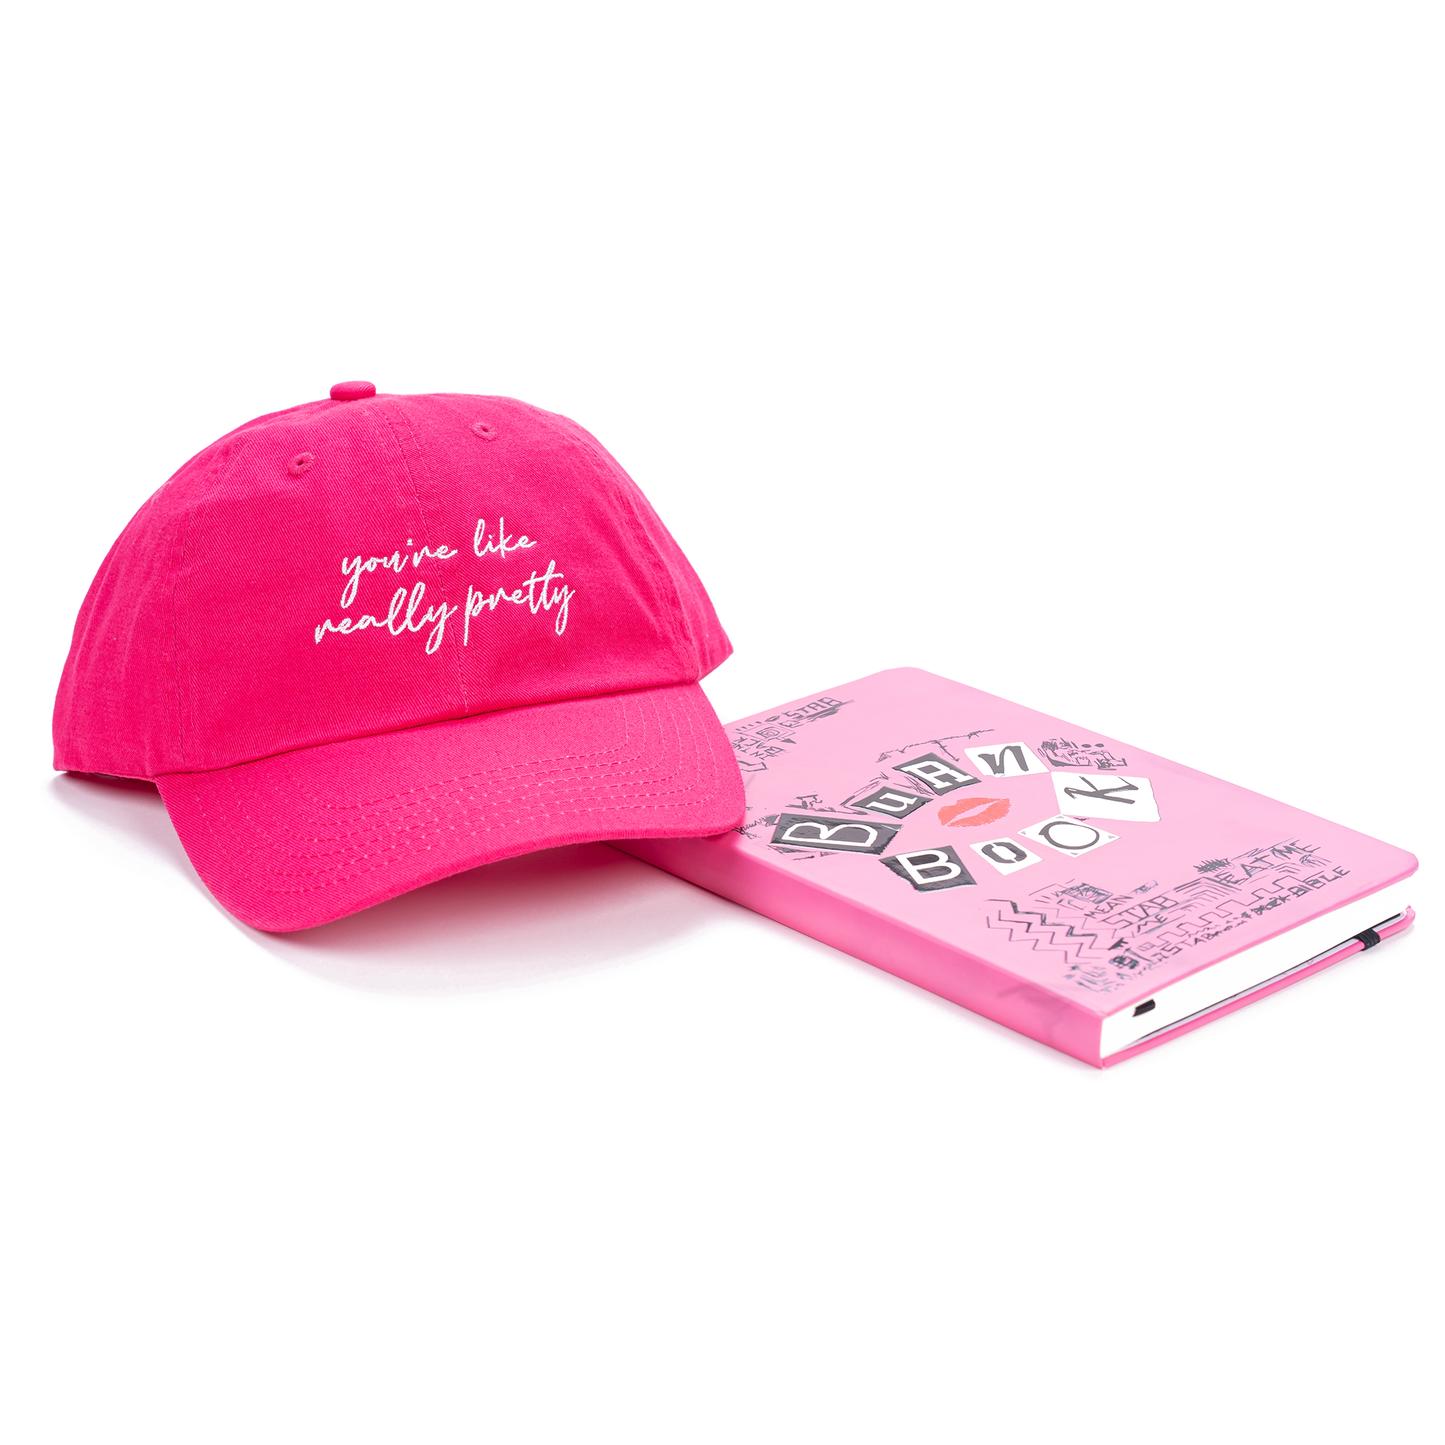 You're like really pretty (White) - Baseball Hat (Hot Pink)